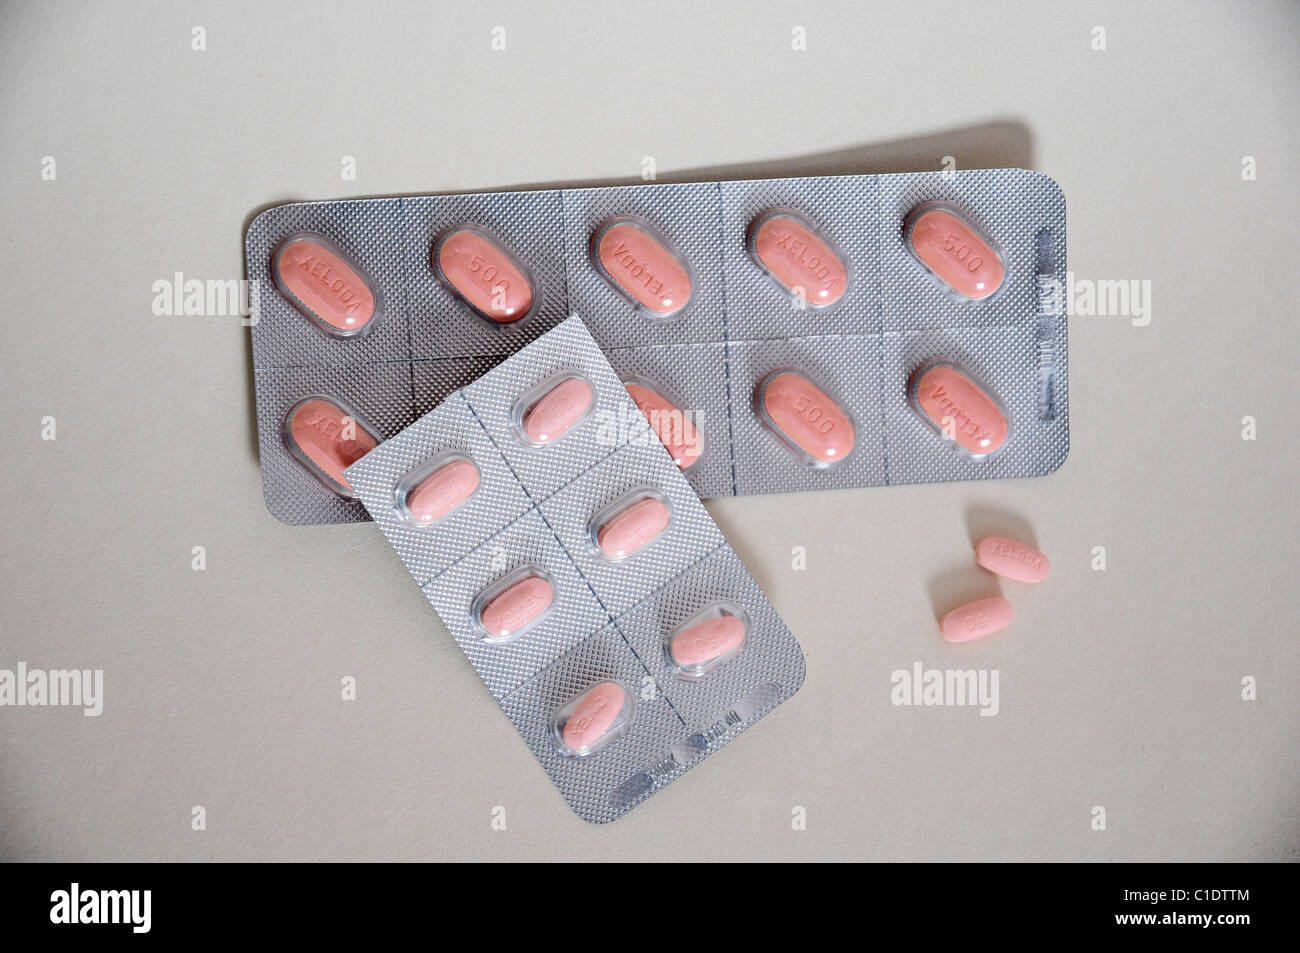 Xeloda Capecitabine Chemotherapie Tabletten Stockfotografie - Alamy